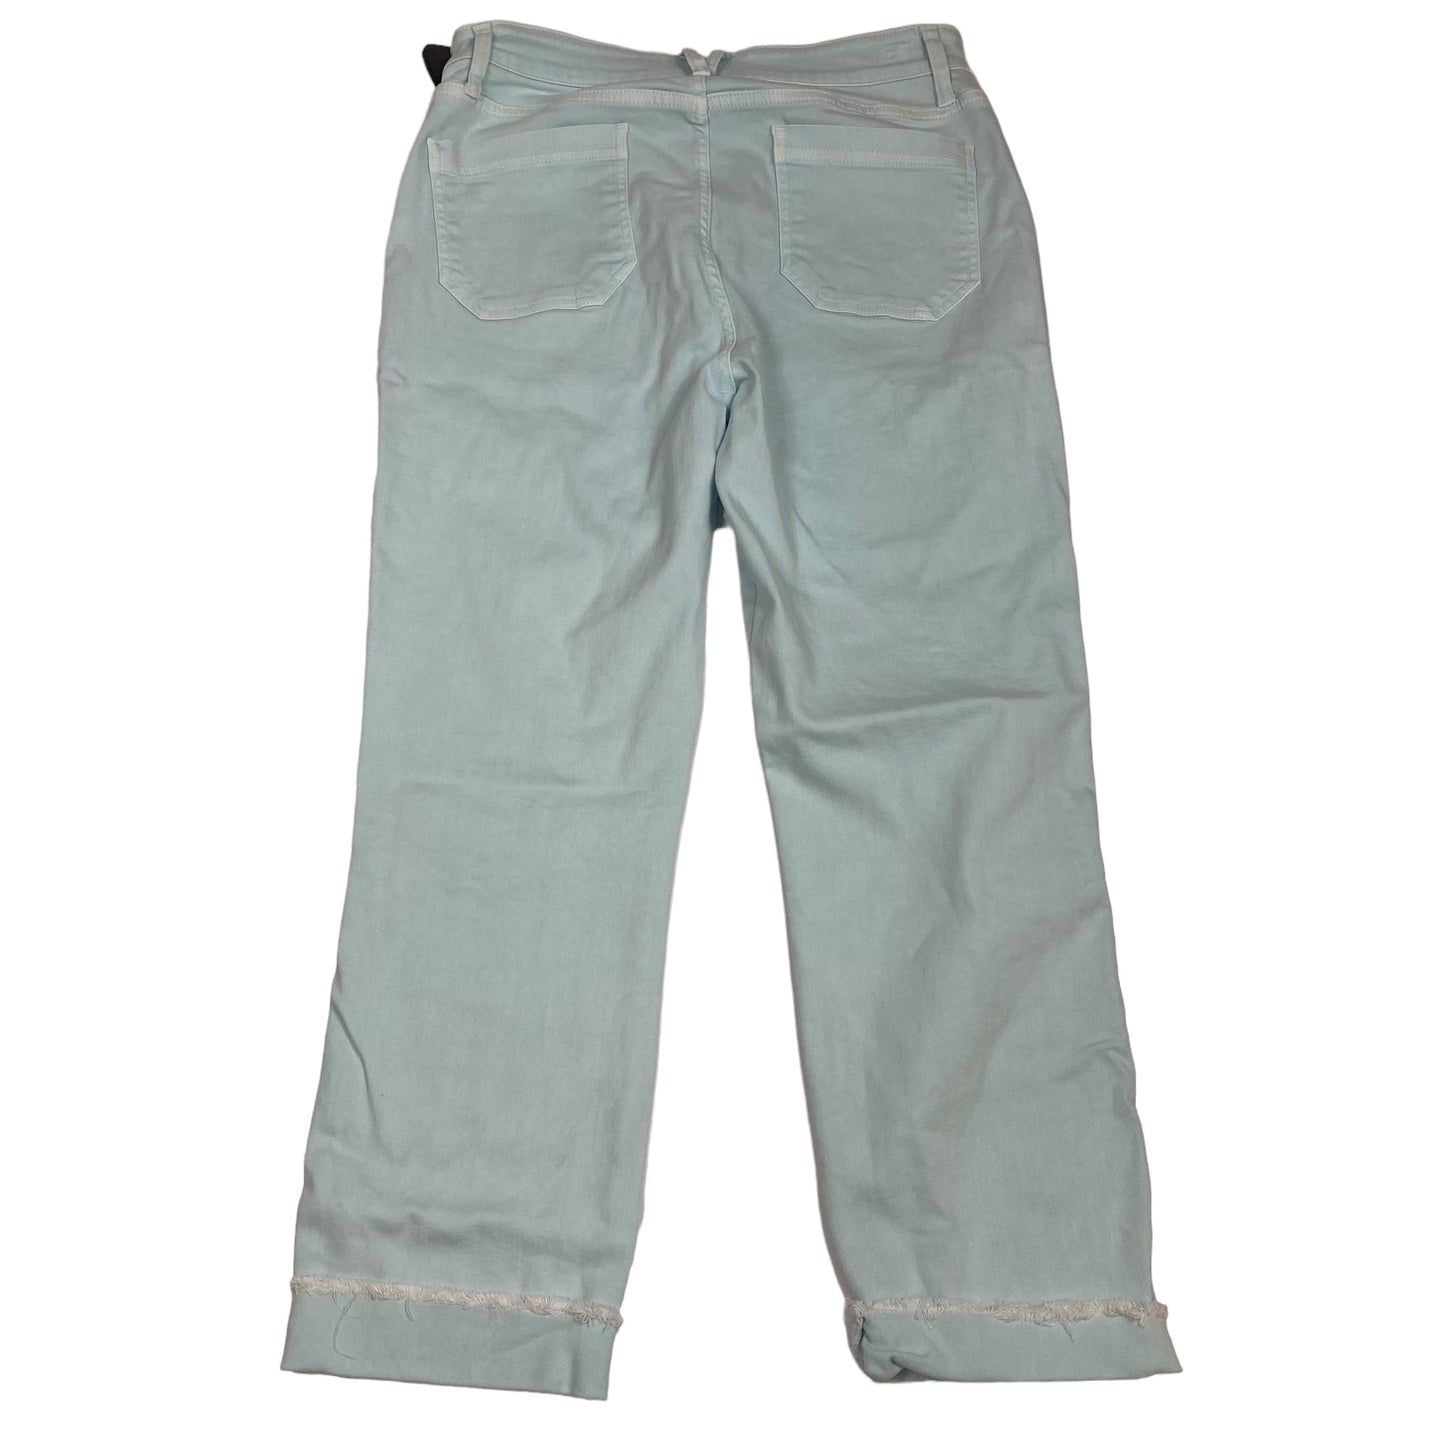 Pants Designer By Vineyard Vines  Size: 12